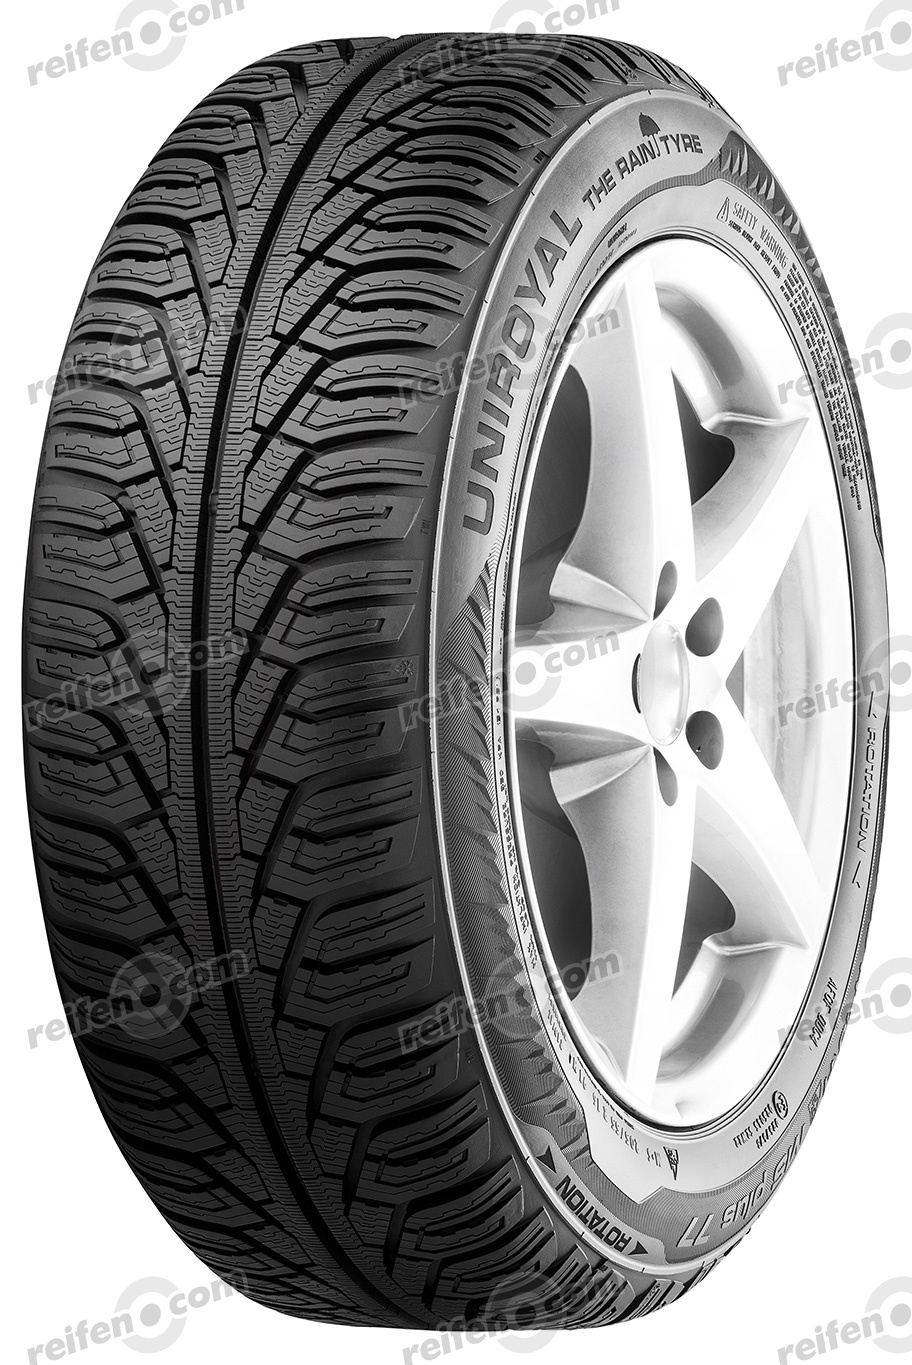 1x los neumáticos de invierno uniroyal MS plus 77 205/50 r17 93v FR XL 